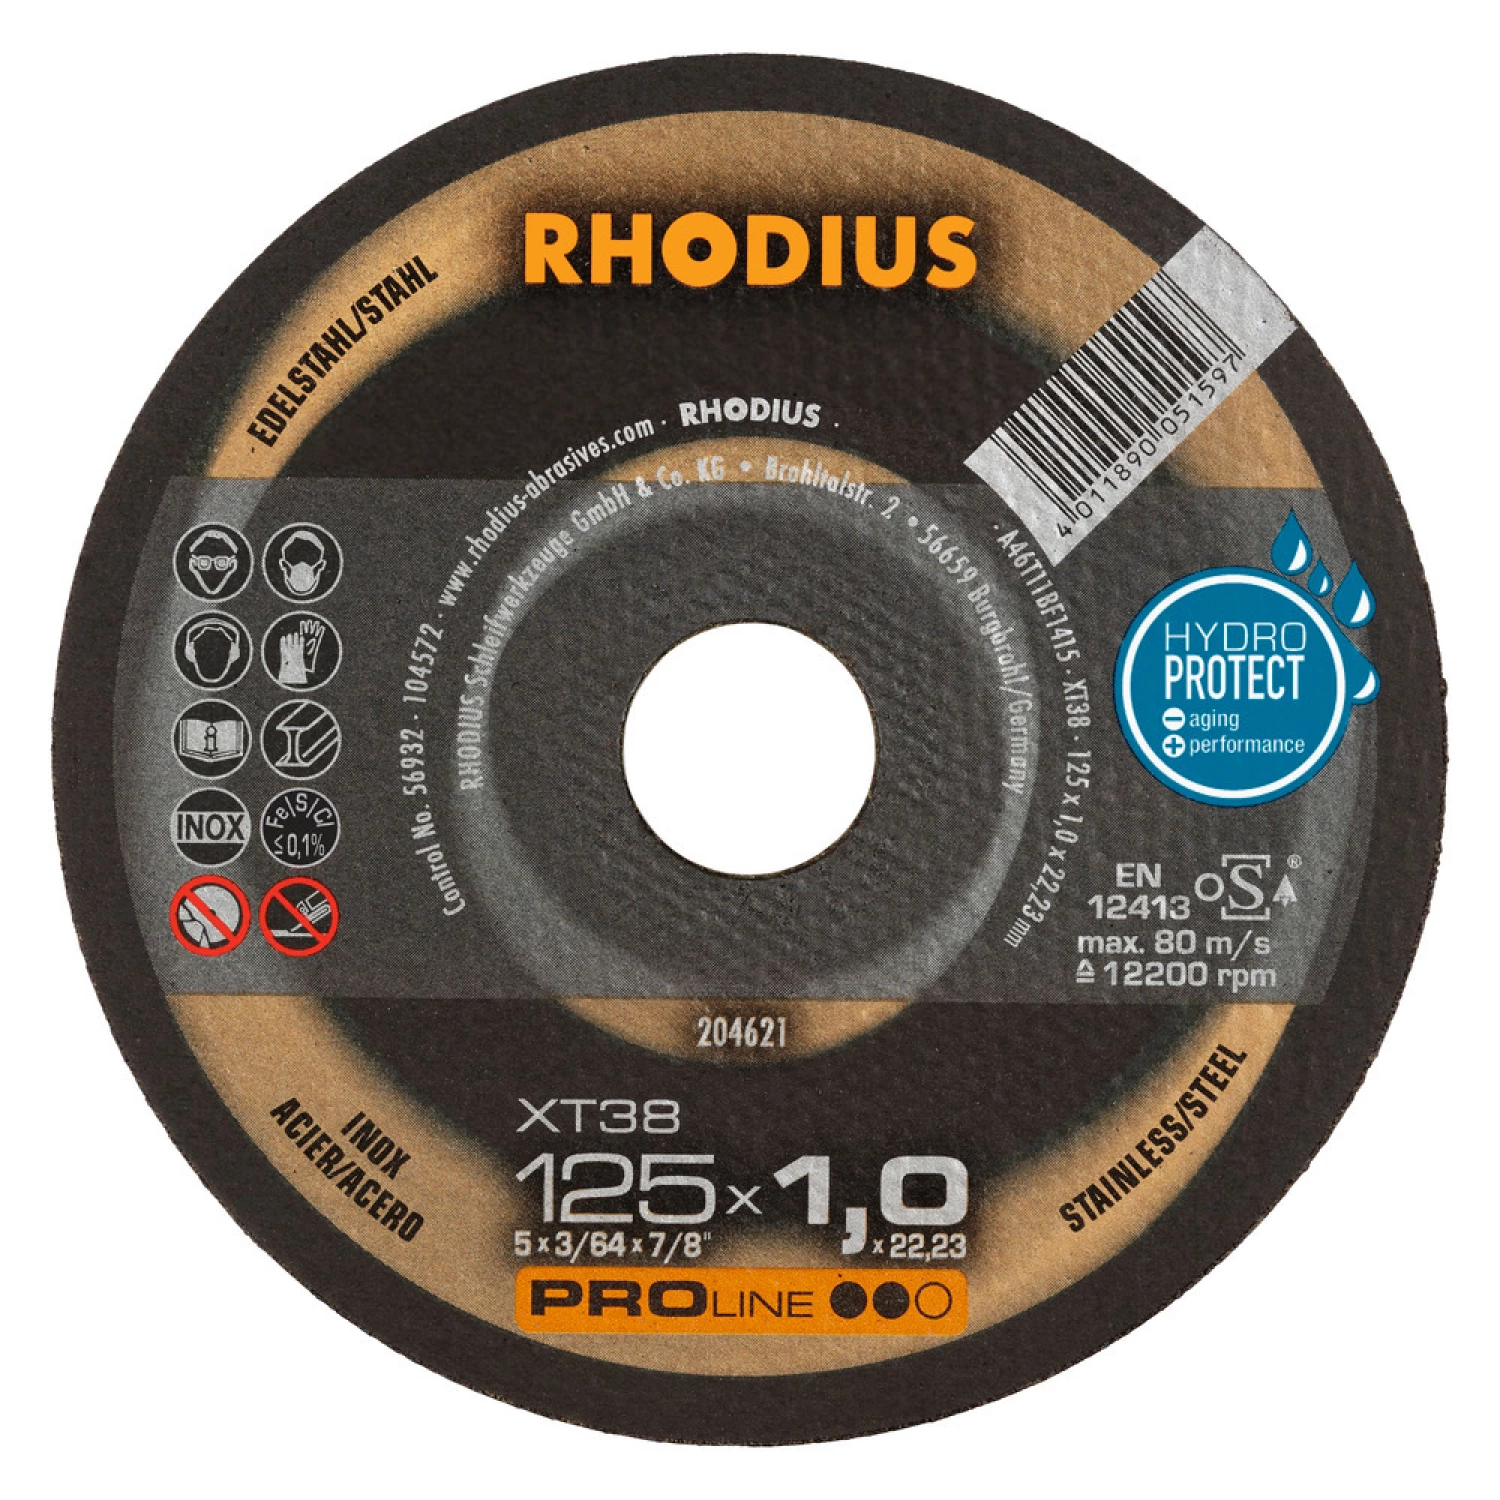 Rhodius 204621 XT38 PROline lll Disque à tronçonner extra fin 125 x 22,23 x 1,0mm (50 pcs)